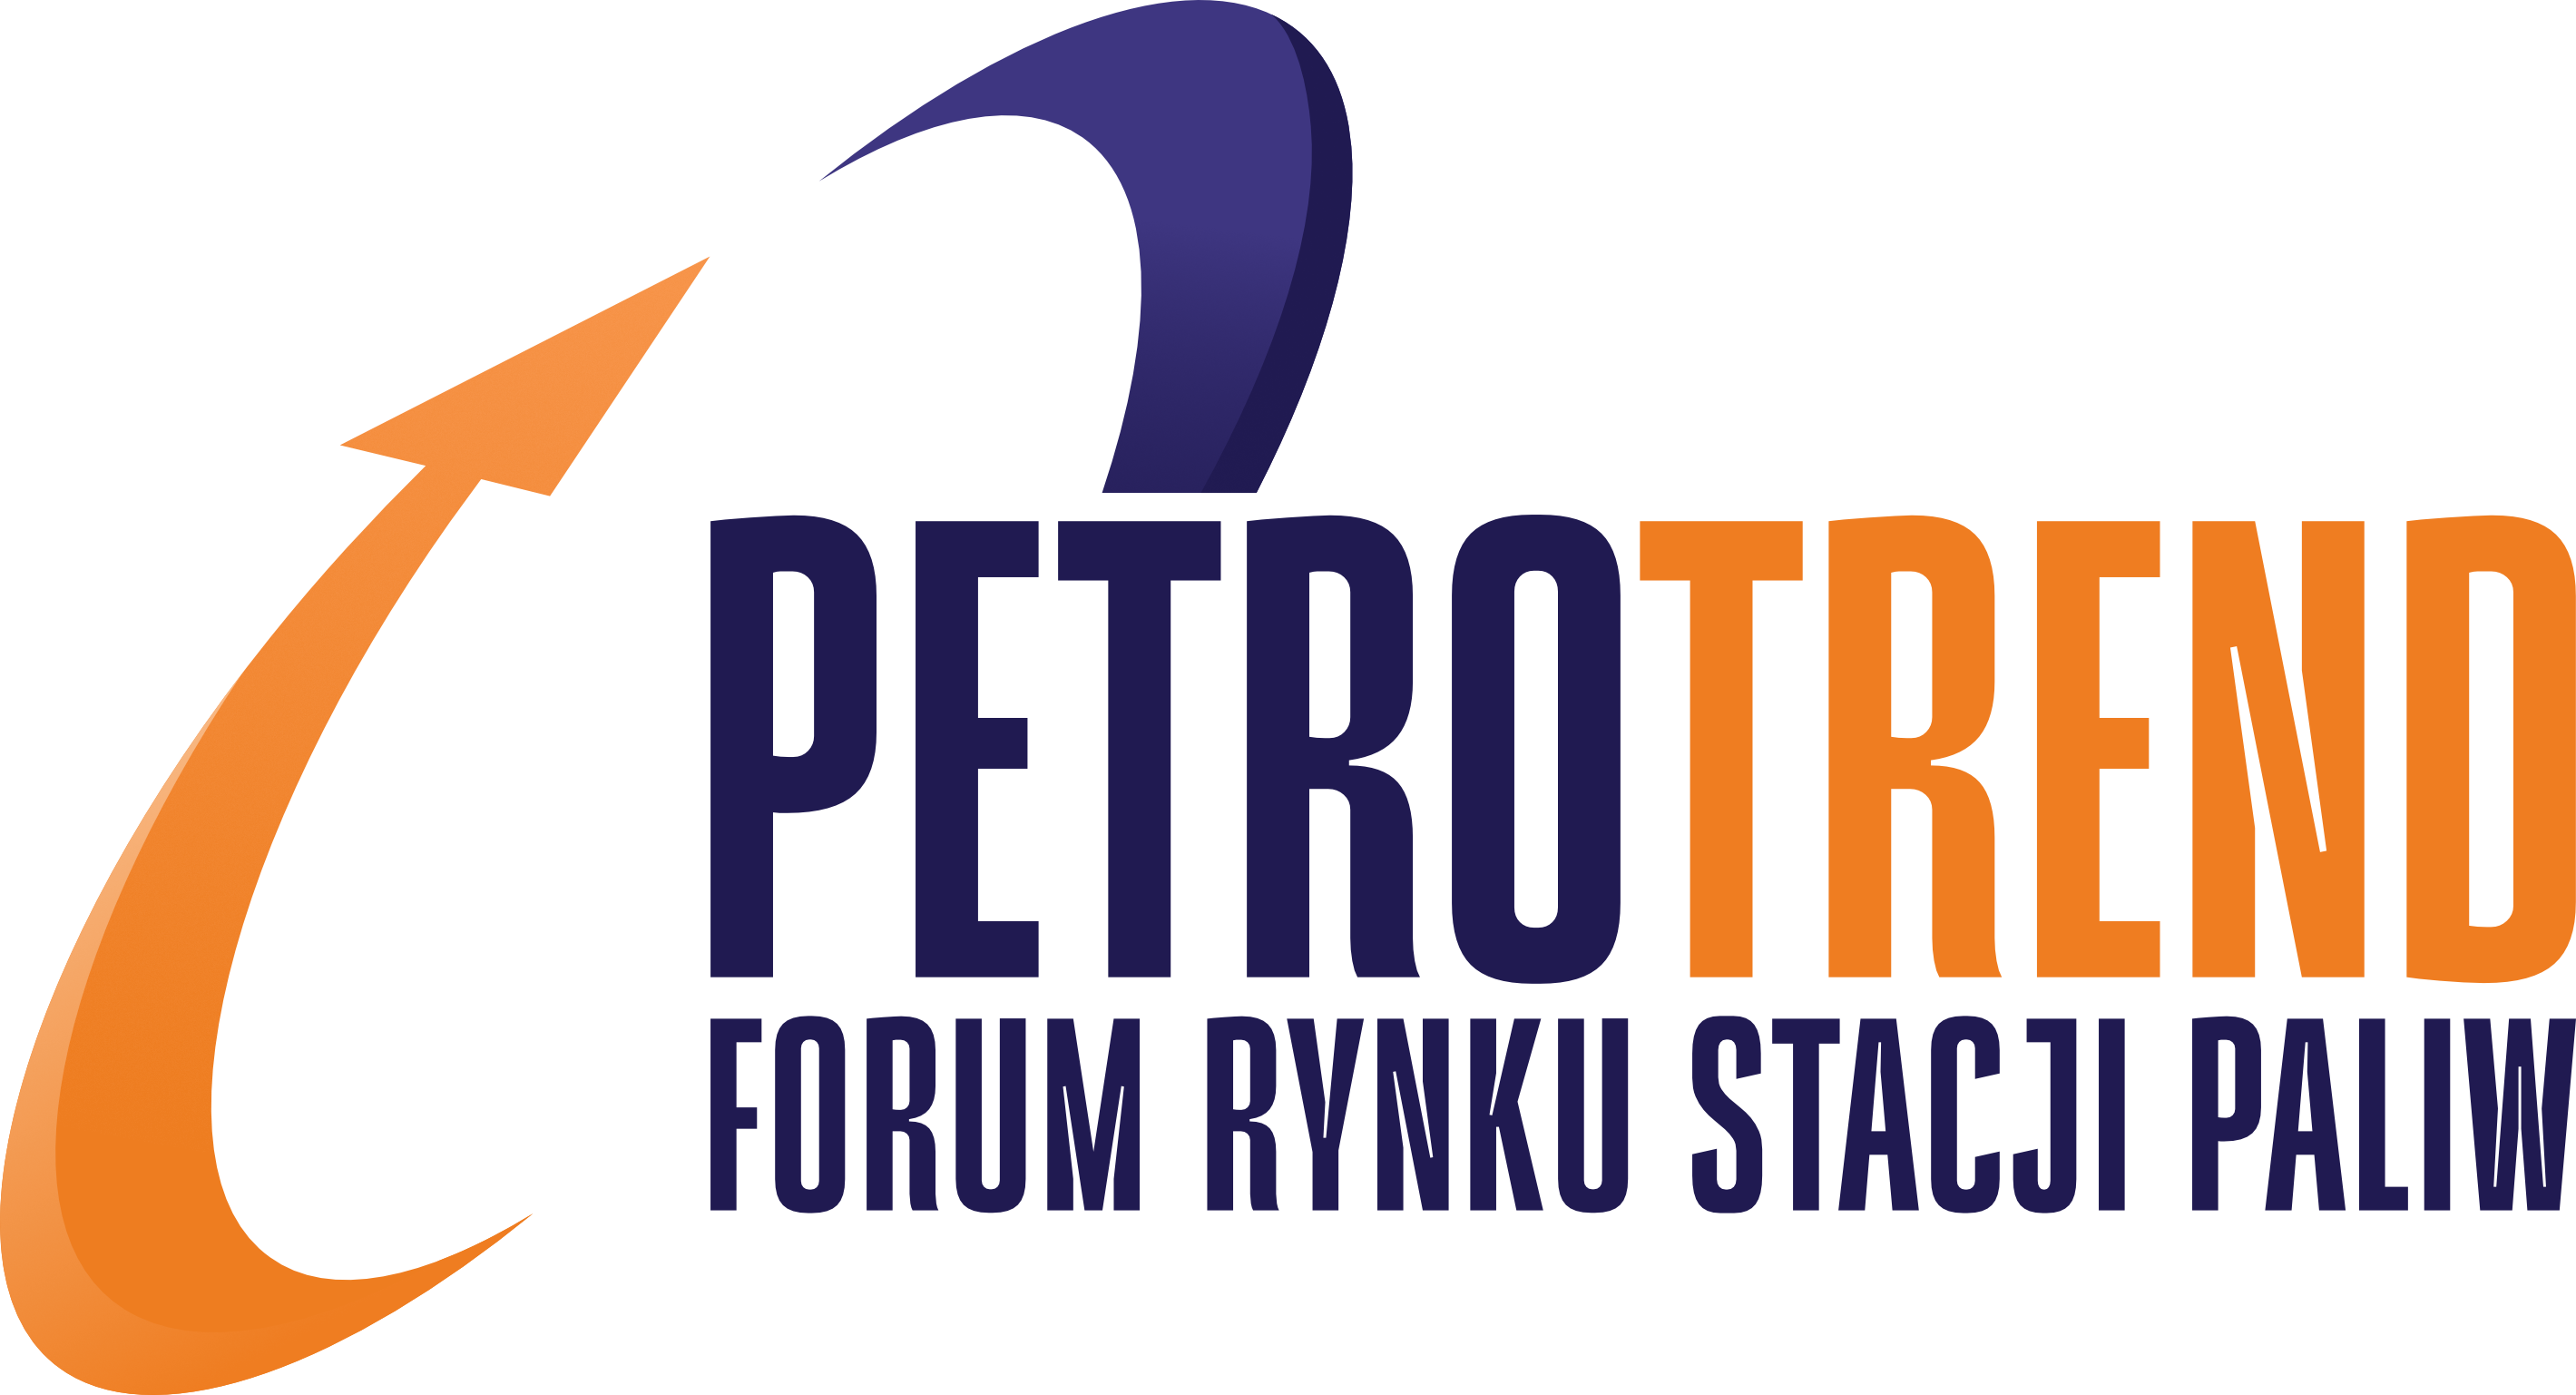 Forum PetroTrend logo